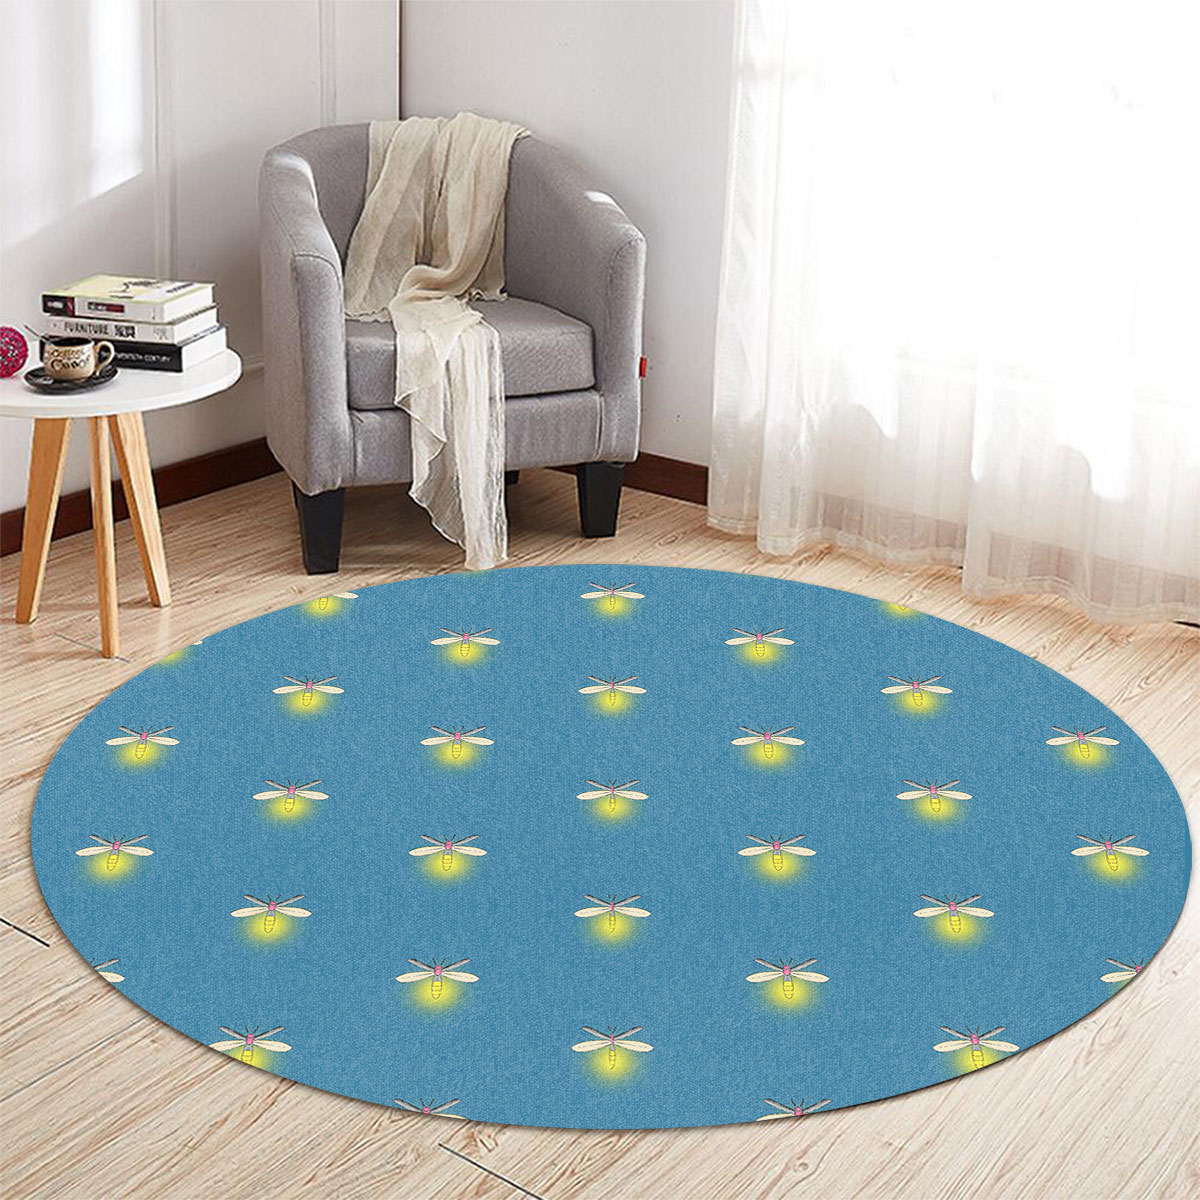 Fireflies On Blue Round Carpet